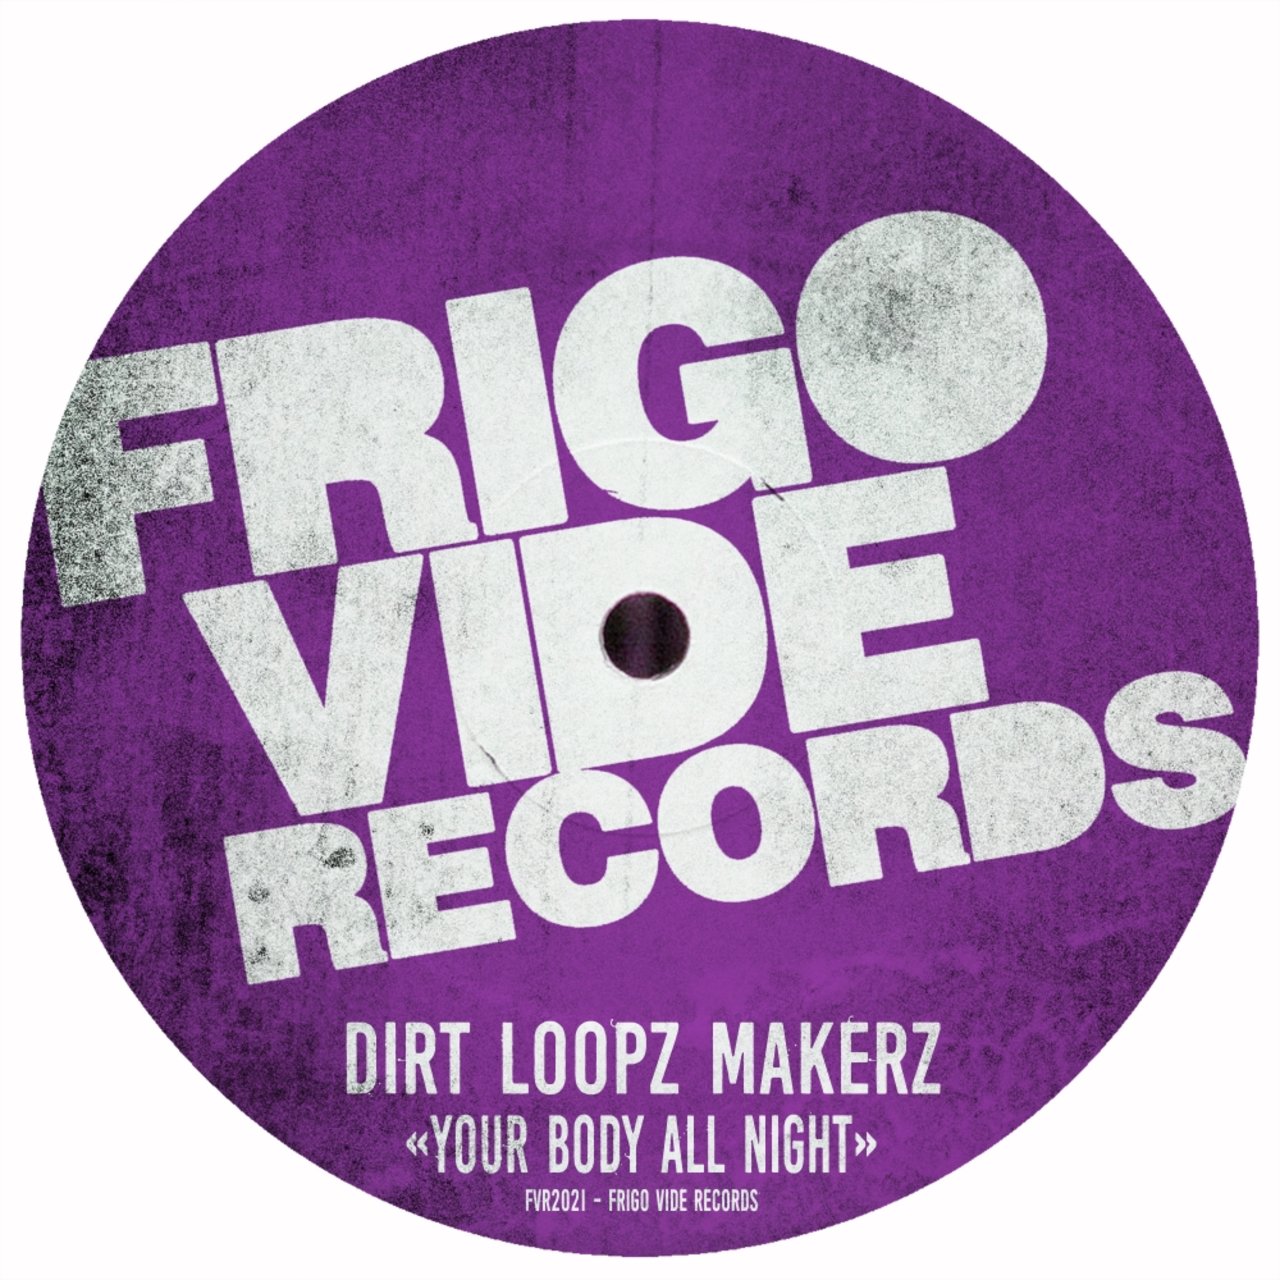 Dirt Loopz Makerz - Your Body All Night / Frigo Vide Records